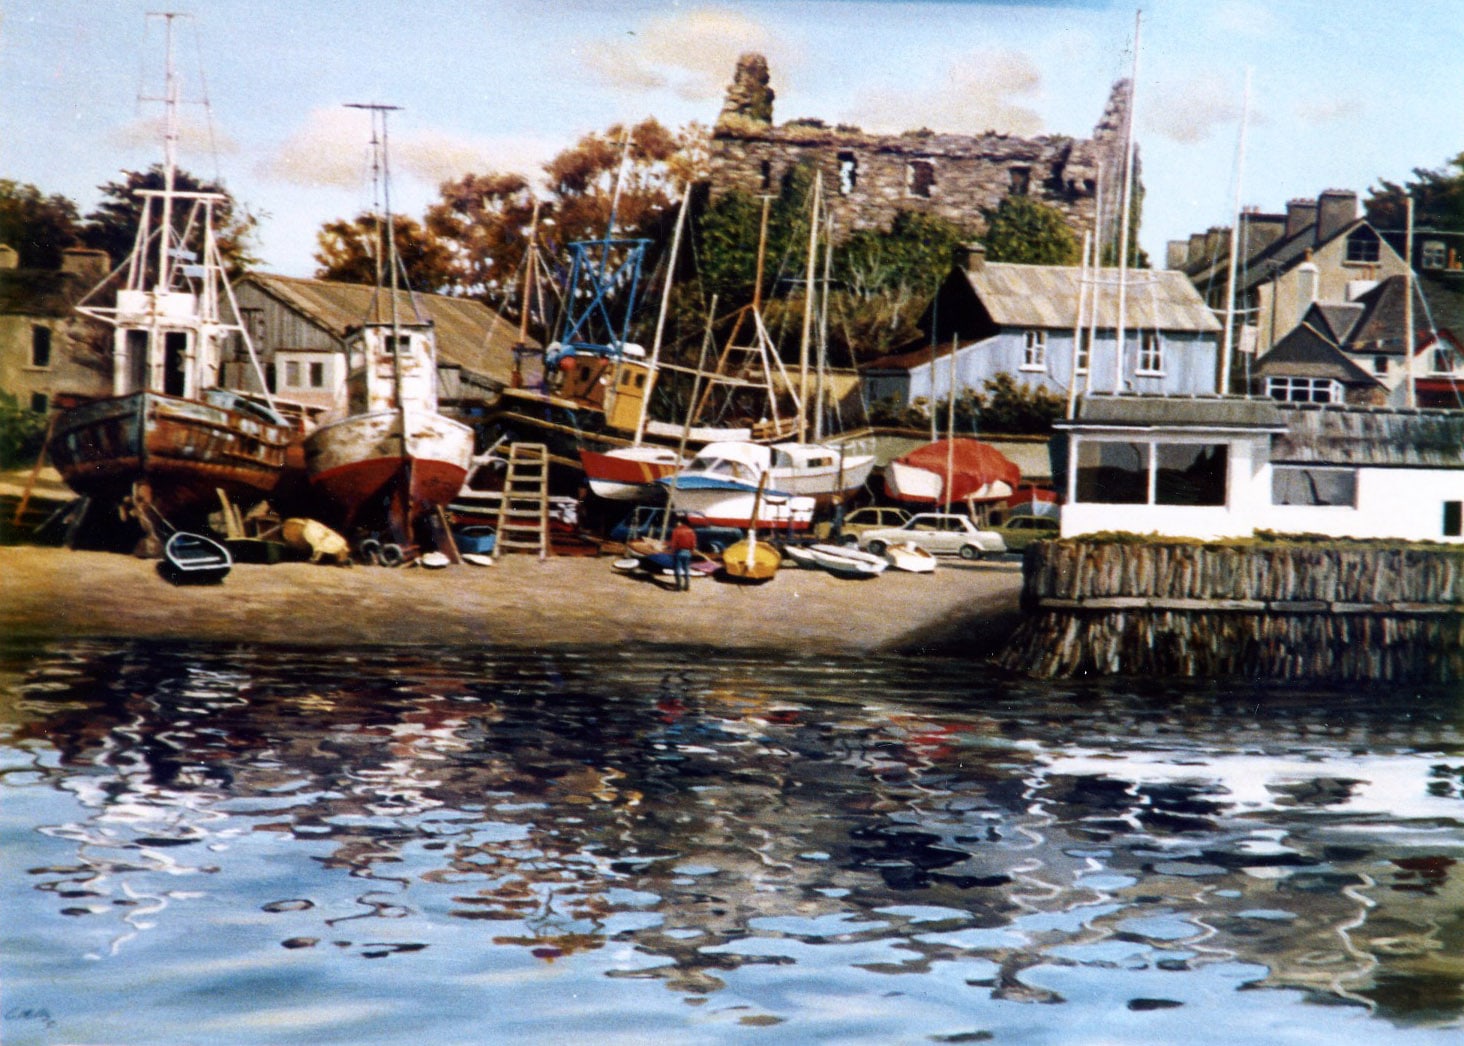 The Balitmore Boat yard 1987 Oil on Panel 22 x 30